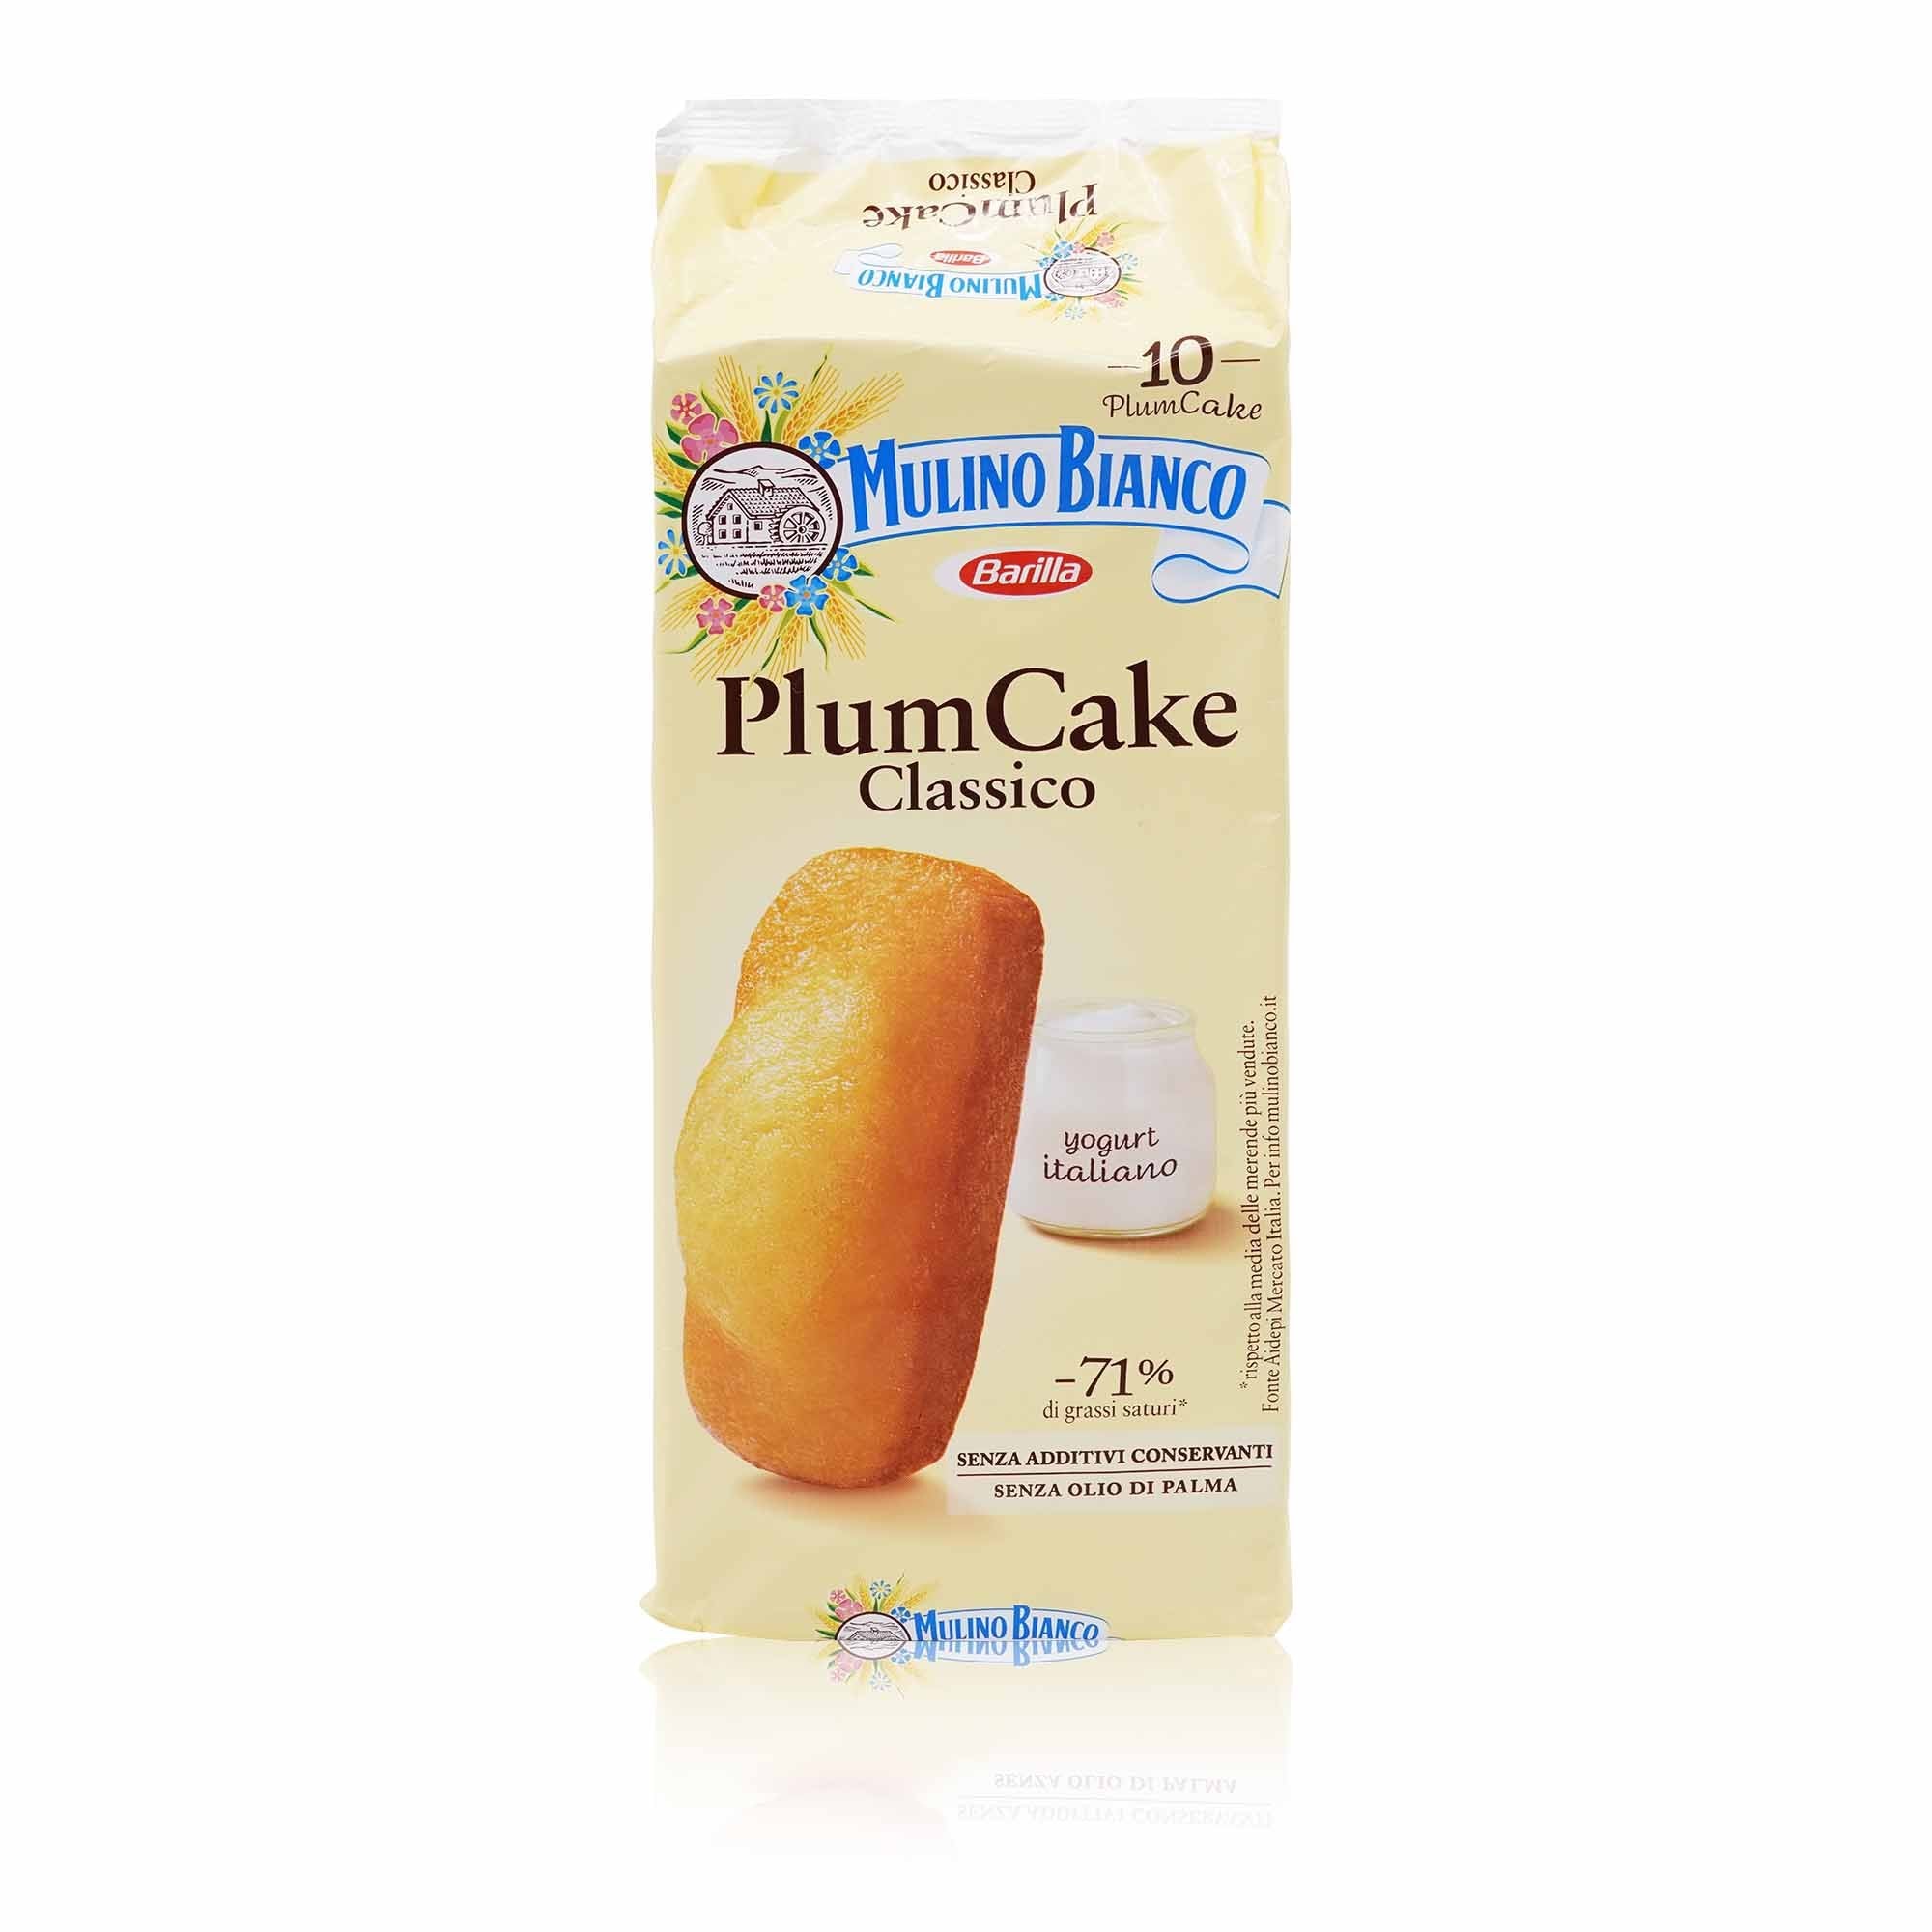 MULINO BIANCO Plumcake – Plumcake - 0,33kg - italienisch-einkaufen.de